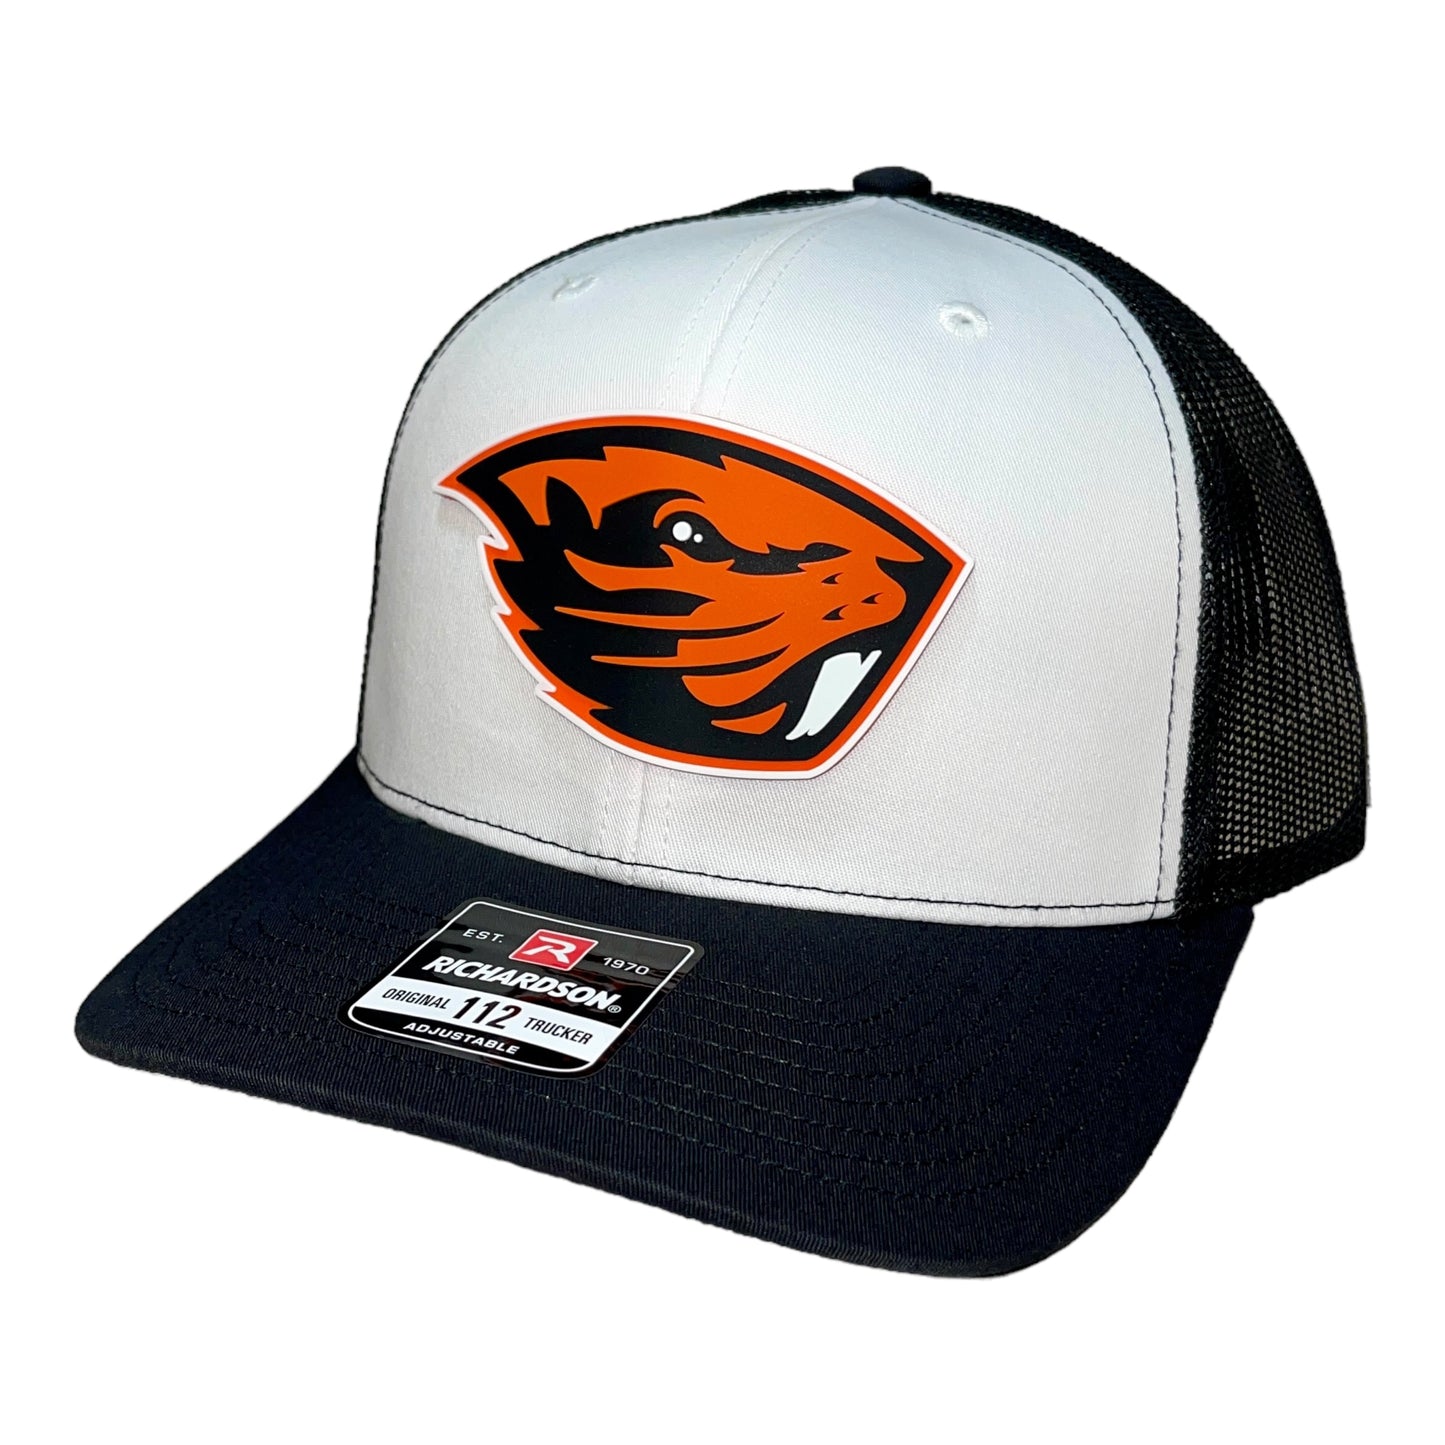 Oregon State Beavers 3D Snapback Trucker Hat- White/ Black